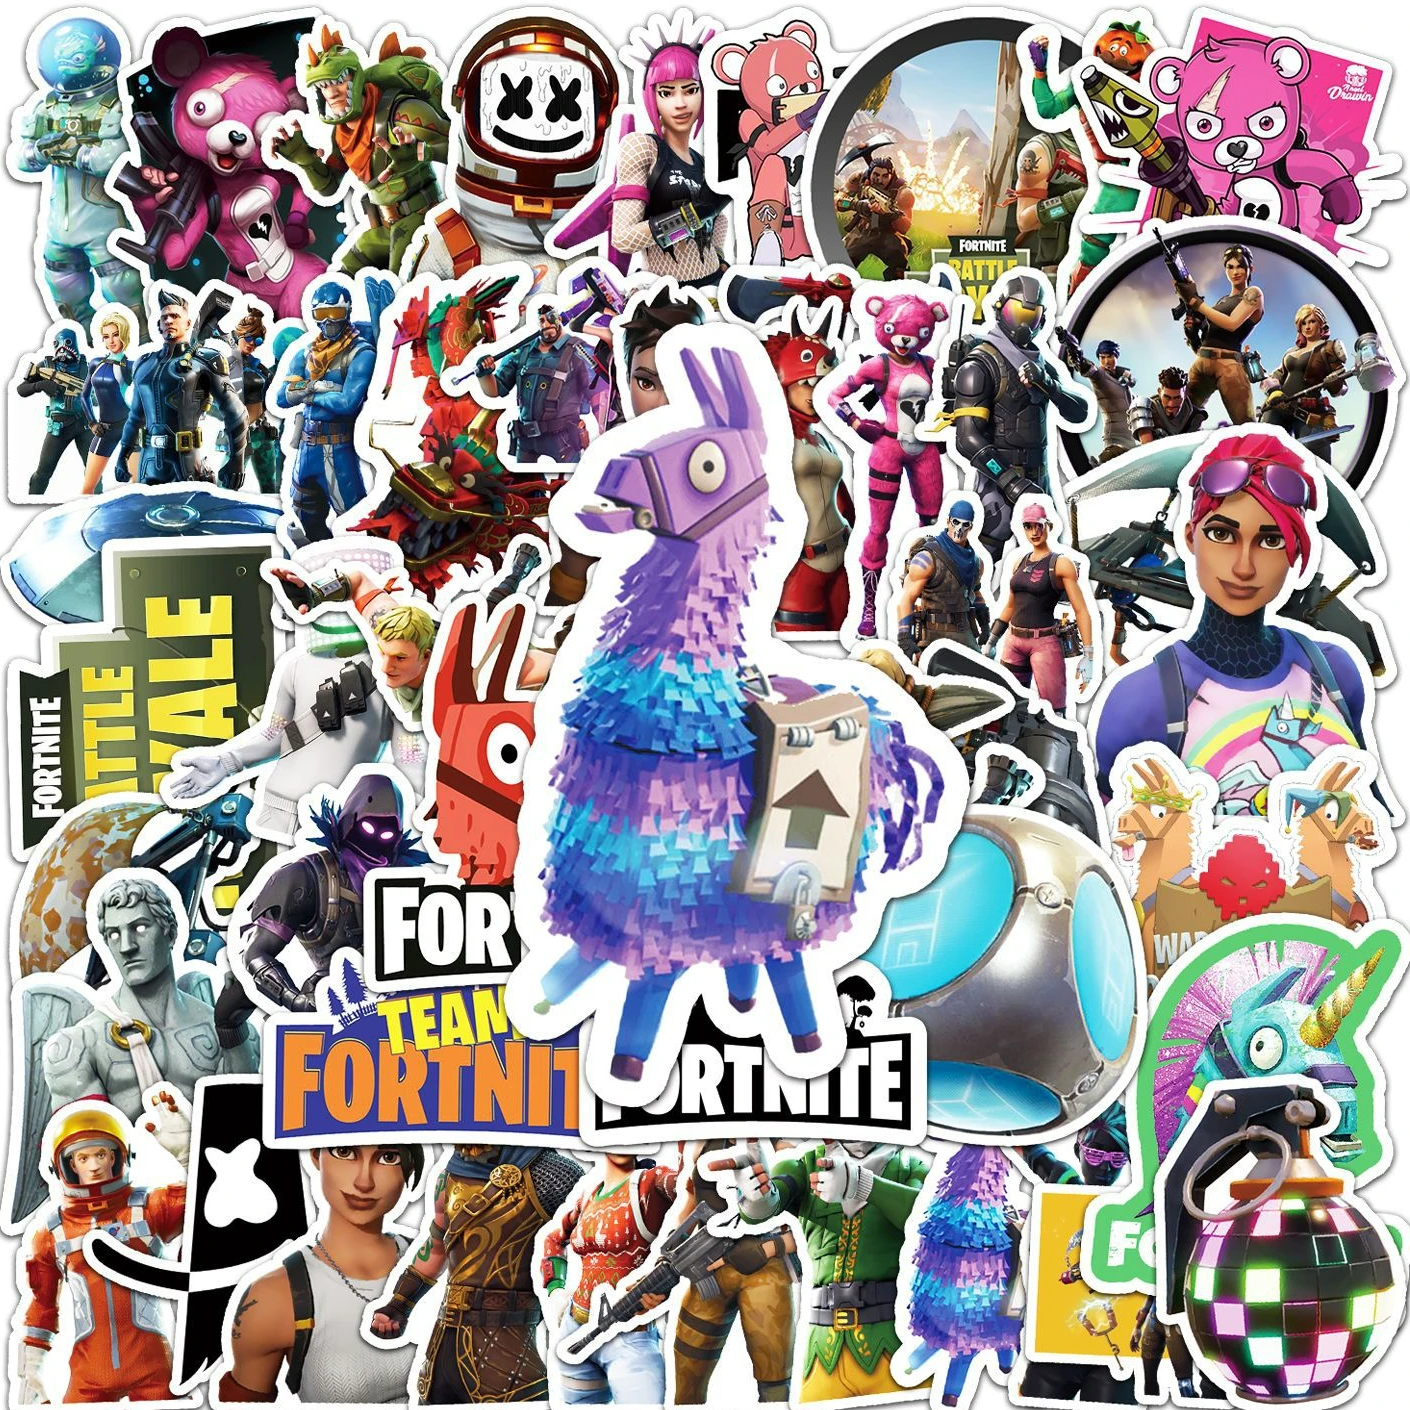 

50pcs Fortnite Stickers Graffiti Stickers Personalized Games Peripherals DIY Waterproof Skateboard Luggage Stickers Kids Gifts